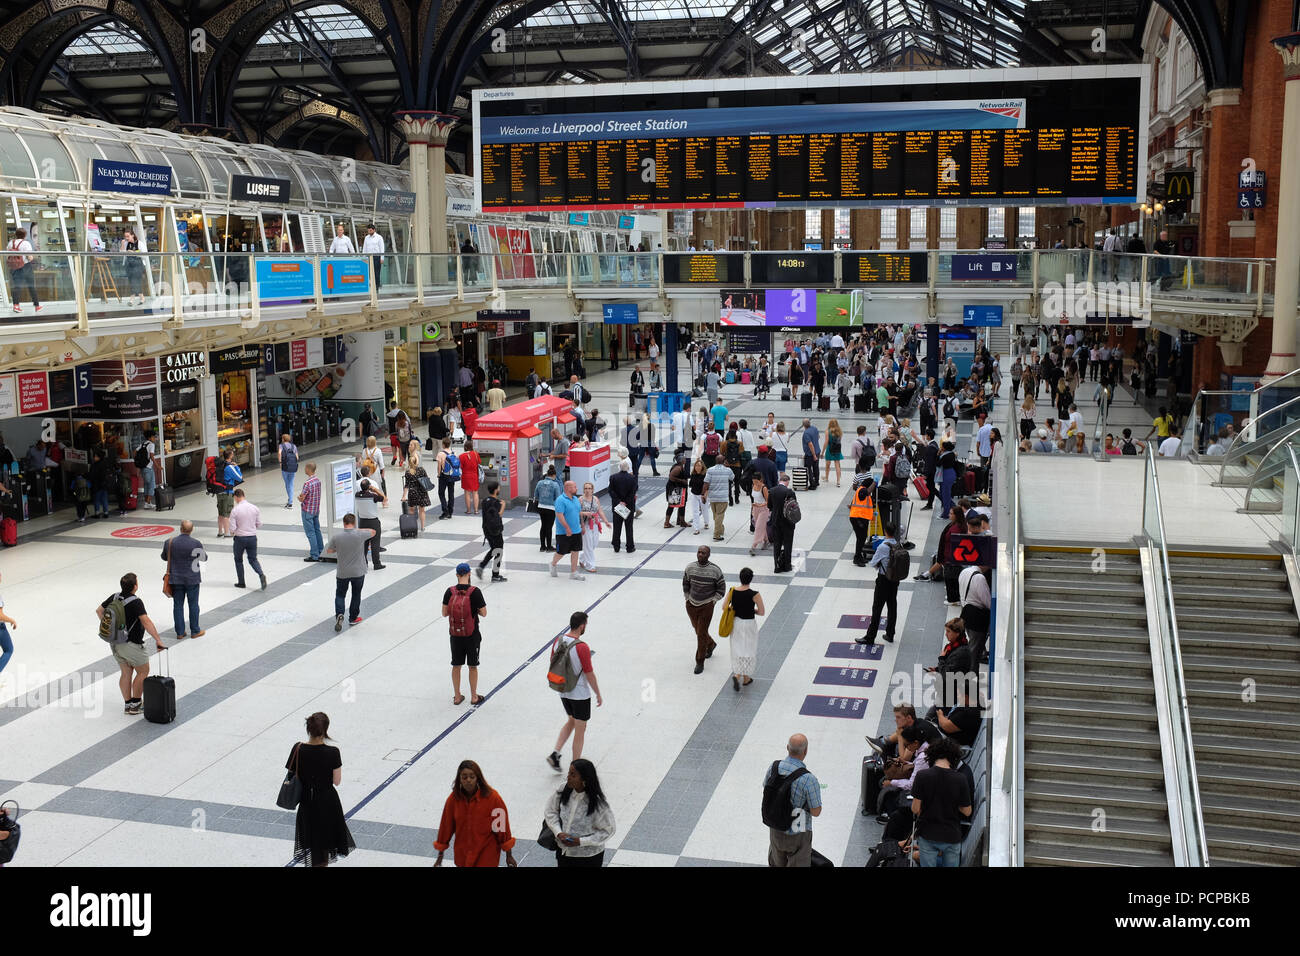 Liverpool Street Station in London, England. Stockfoto